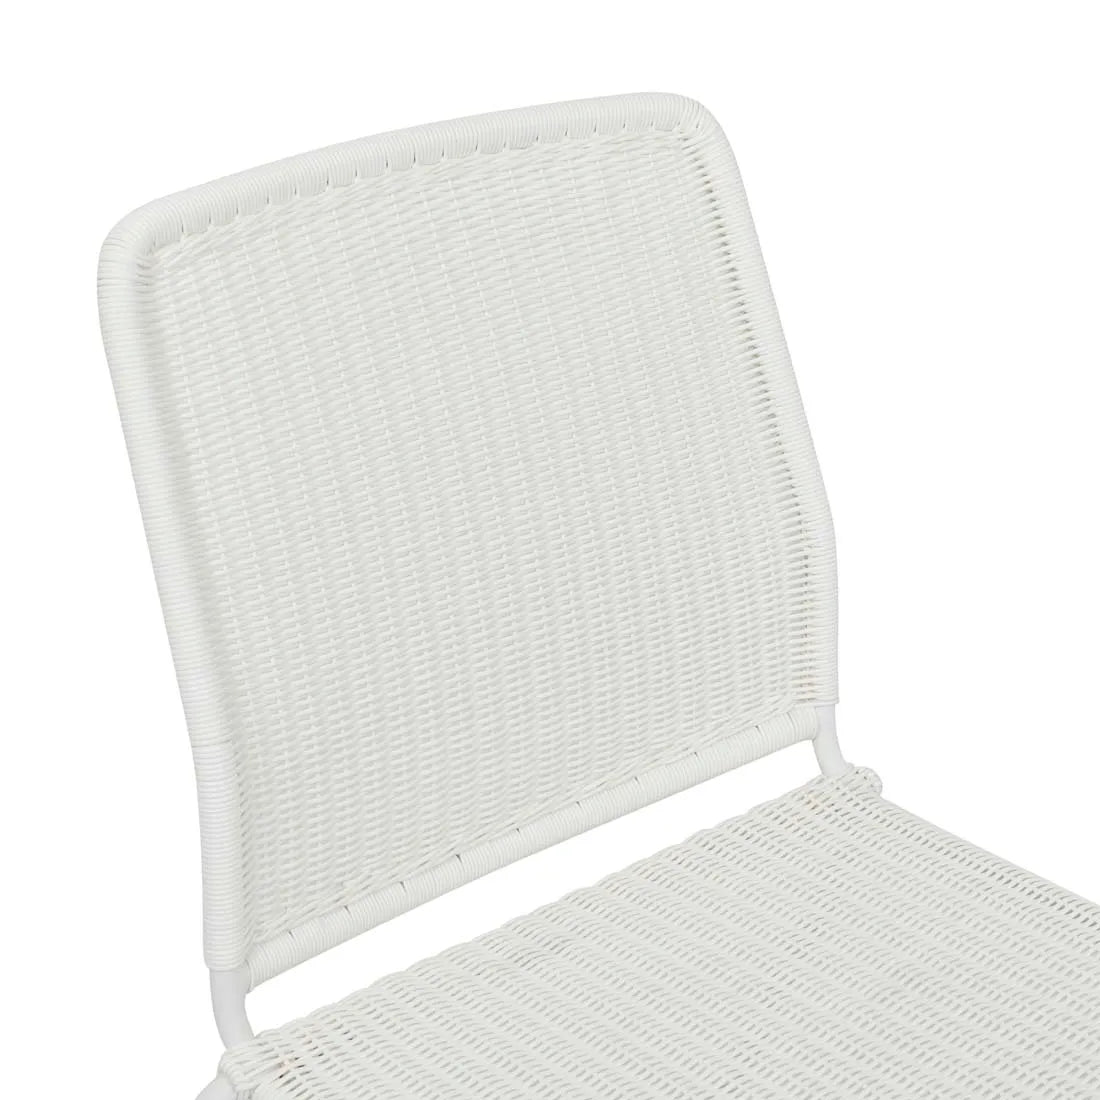 Marina Coast Outdoor Dining Chair - White